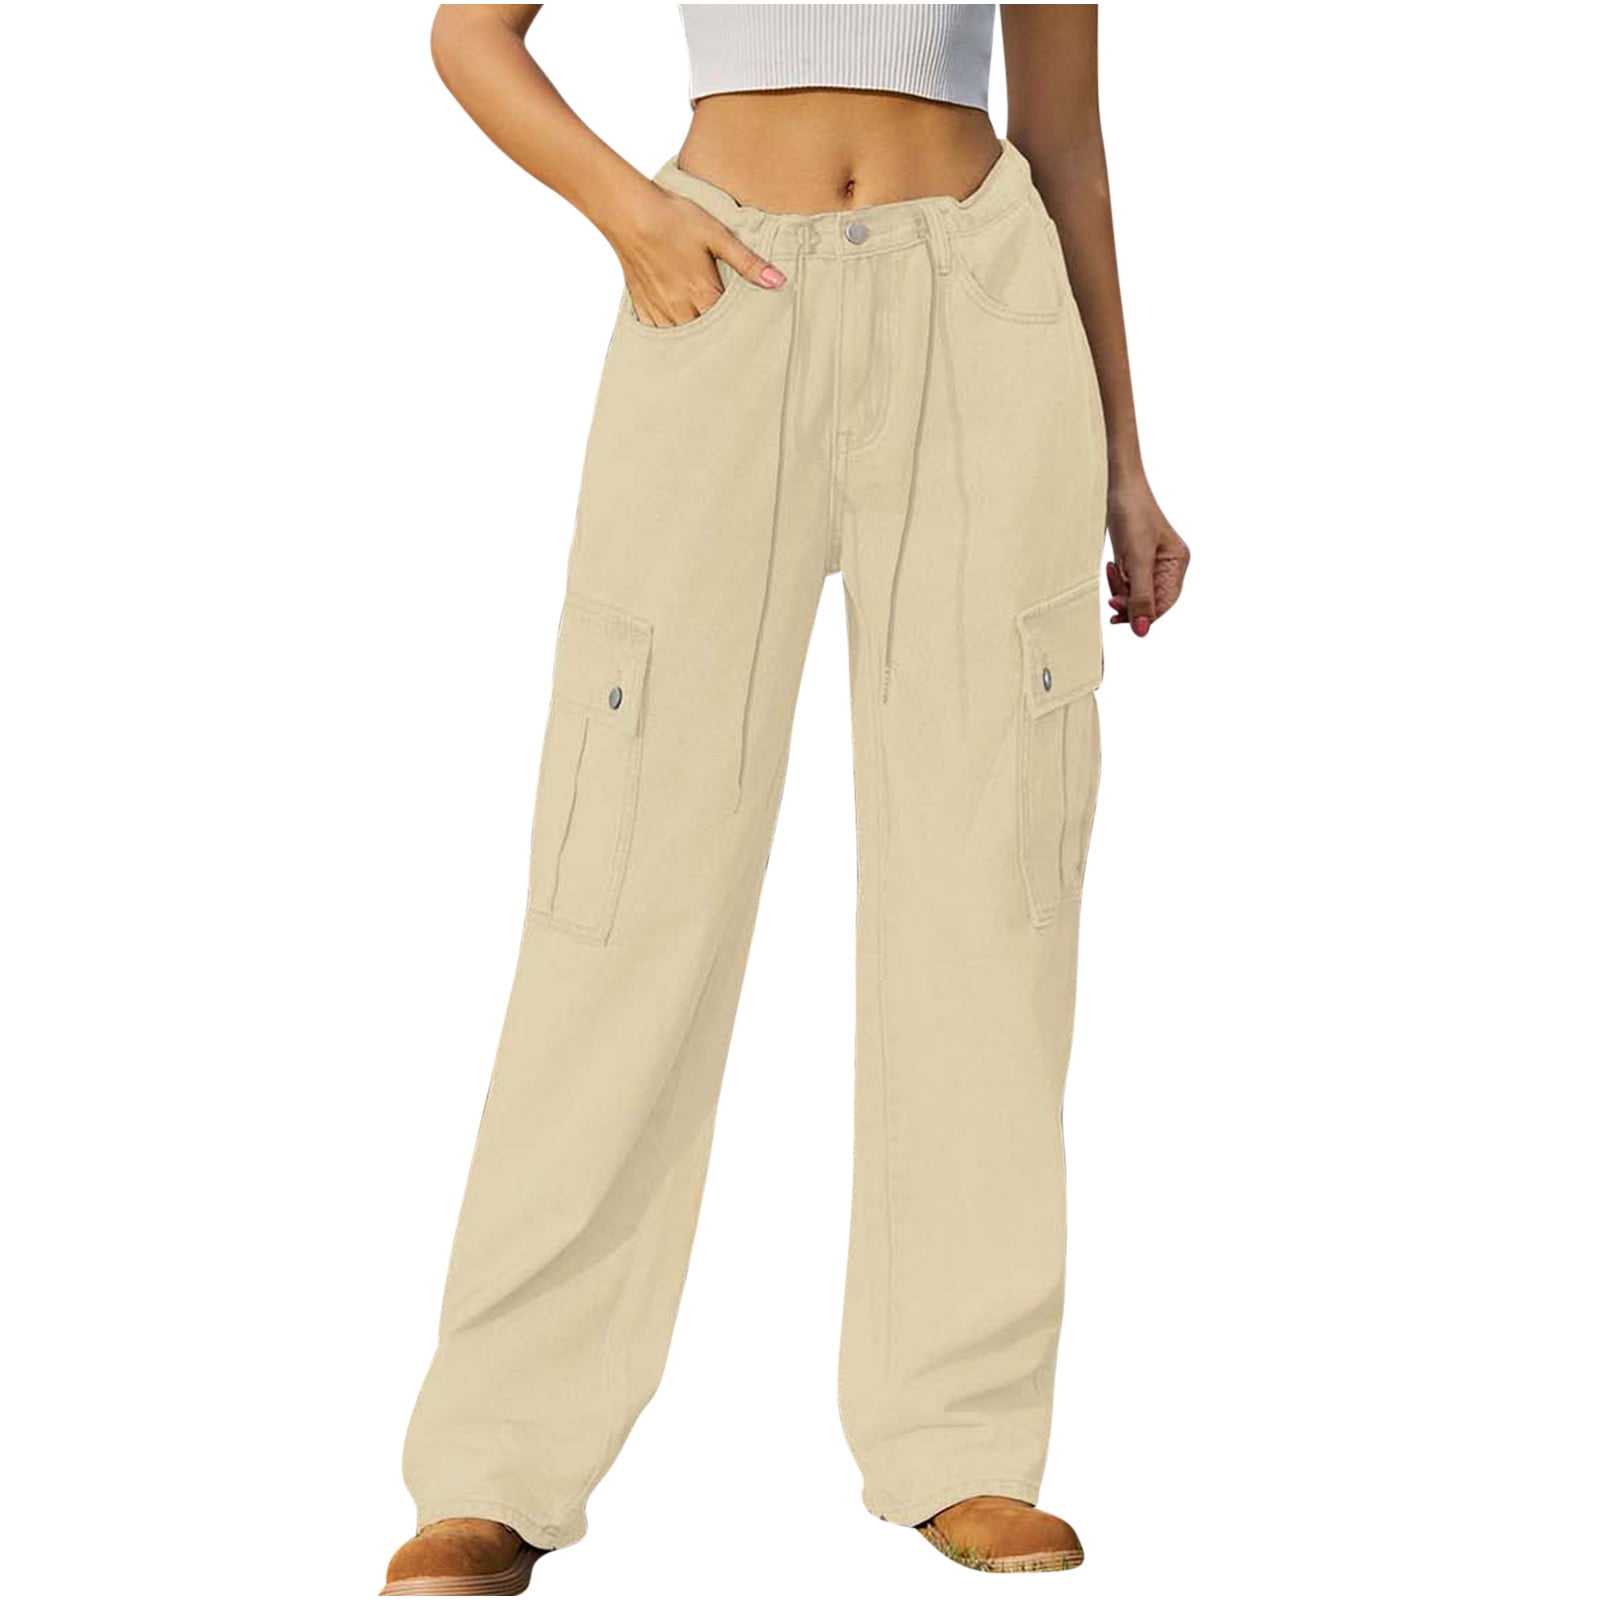 Funicet Women's Pants Fashion Women's Drawstring Pocket Button Mid Waist  Tight Pants